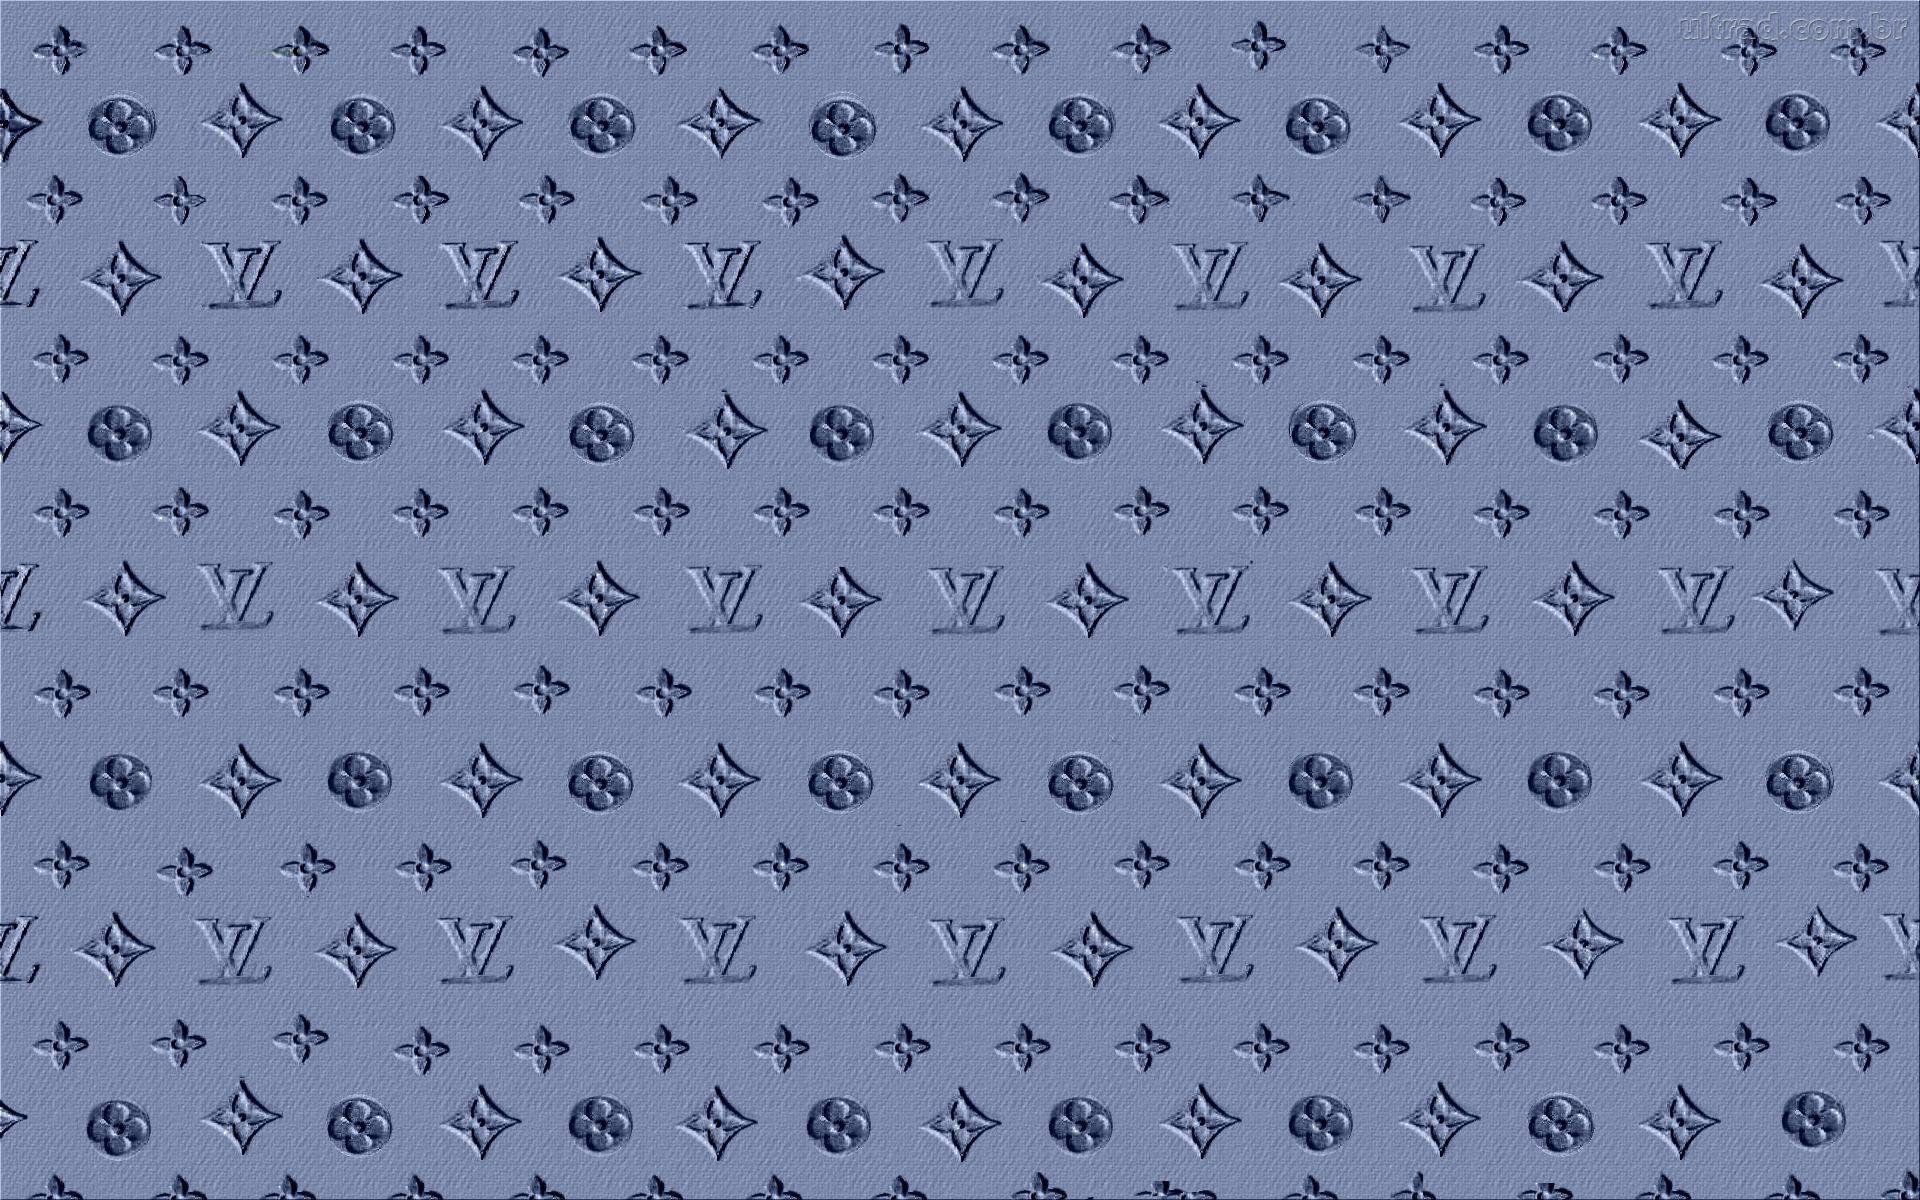 Louis Vuitton Patterns Wallpapers